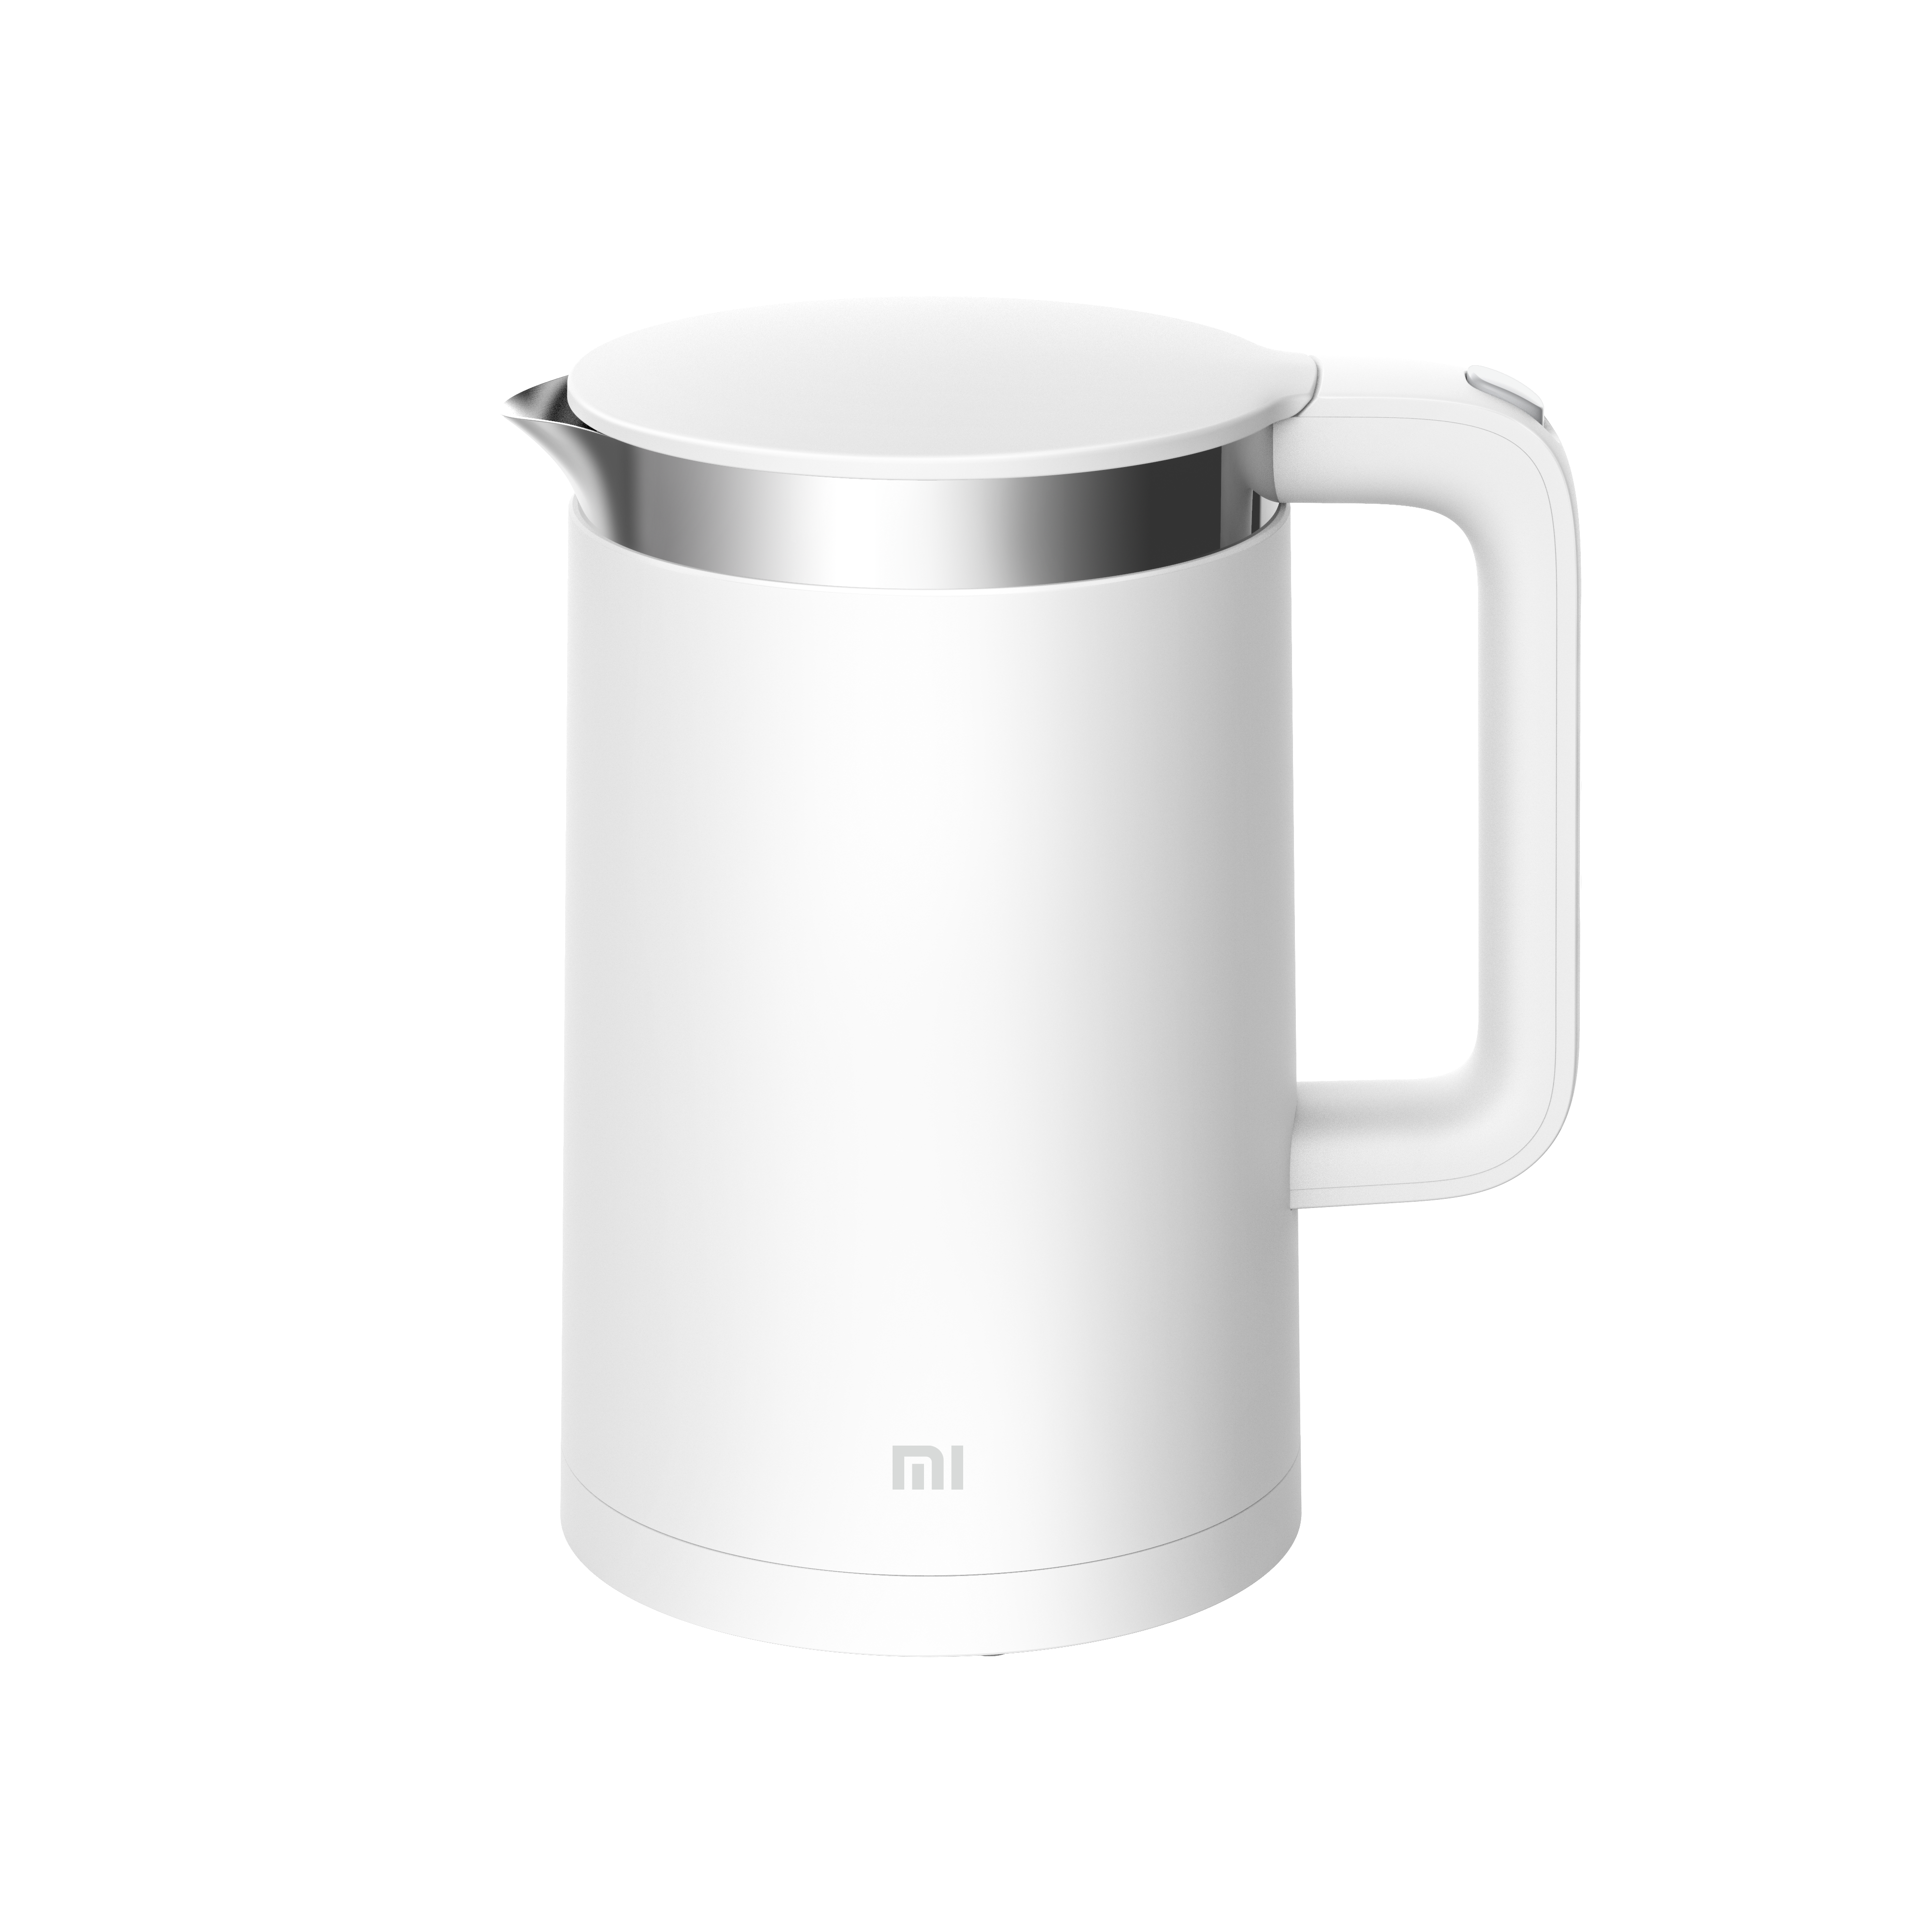 Improvement Xiaomi smart kettle (I need help!)